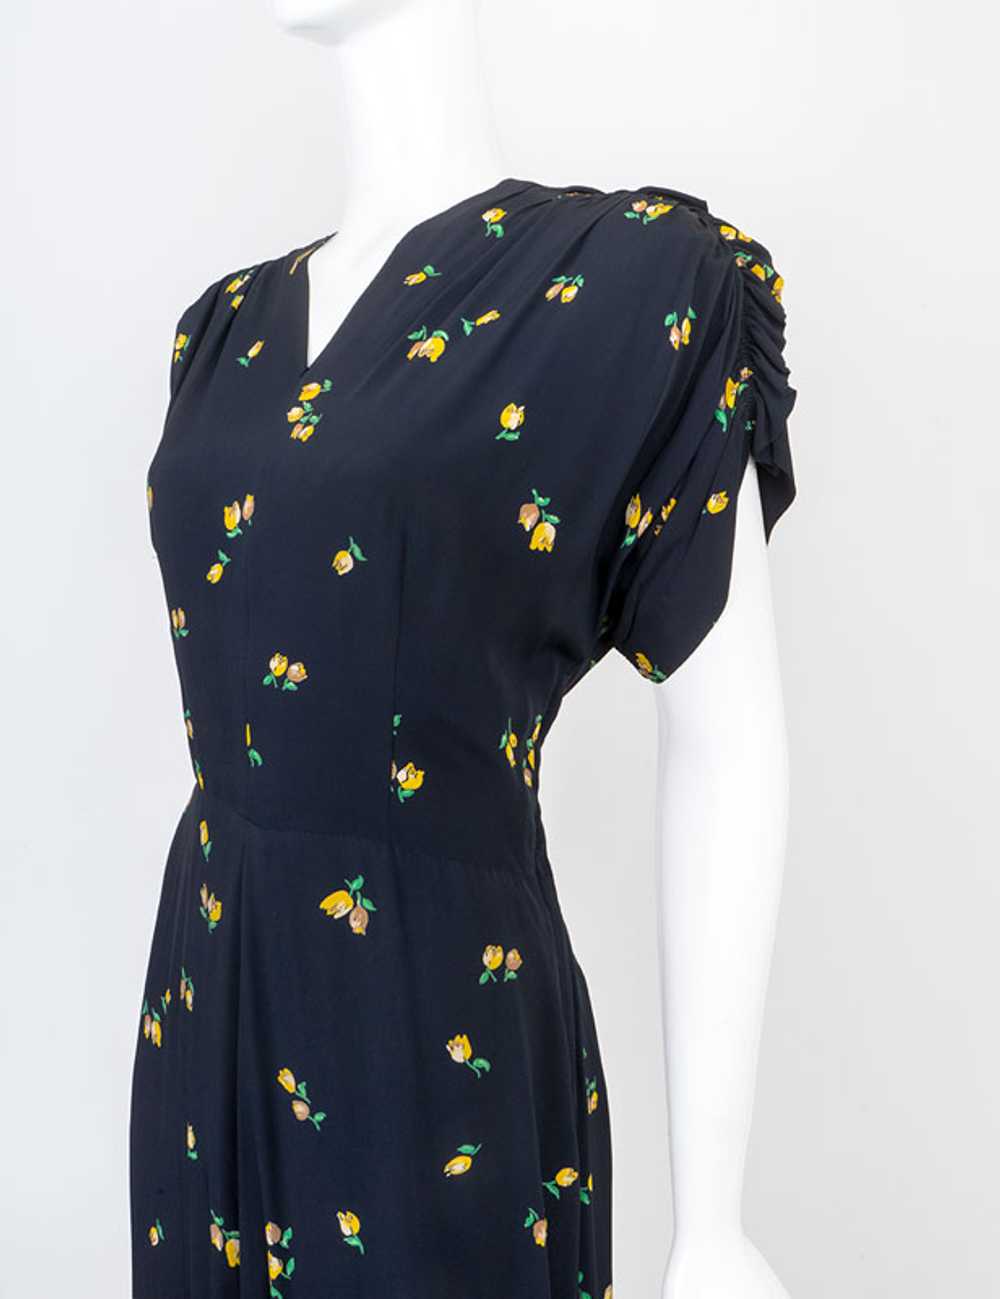 Gorgeous 1940s Evening Dress - image 3